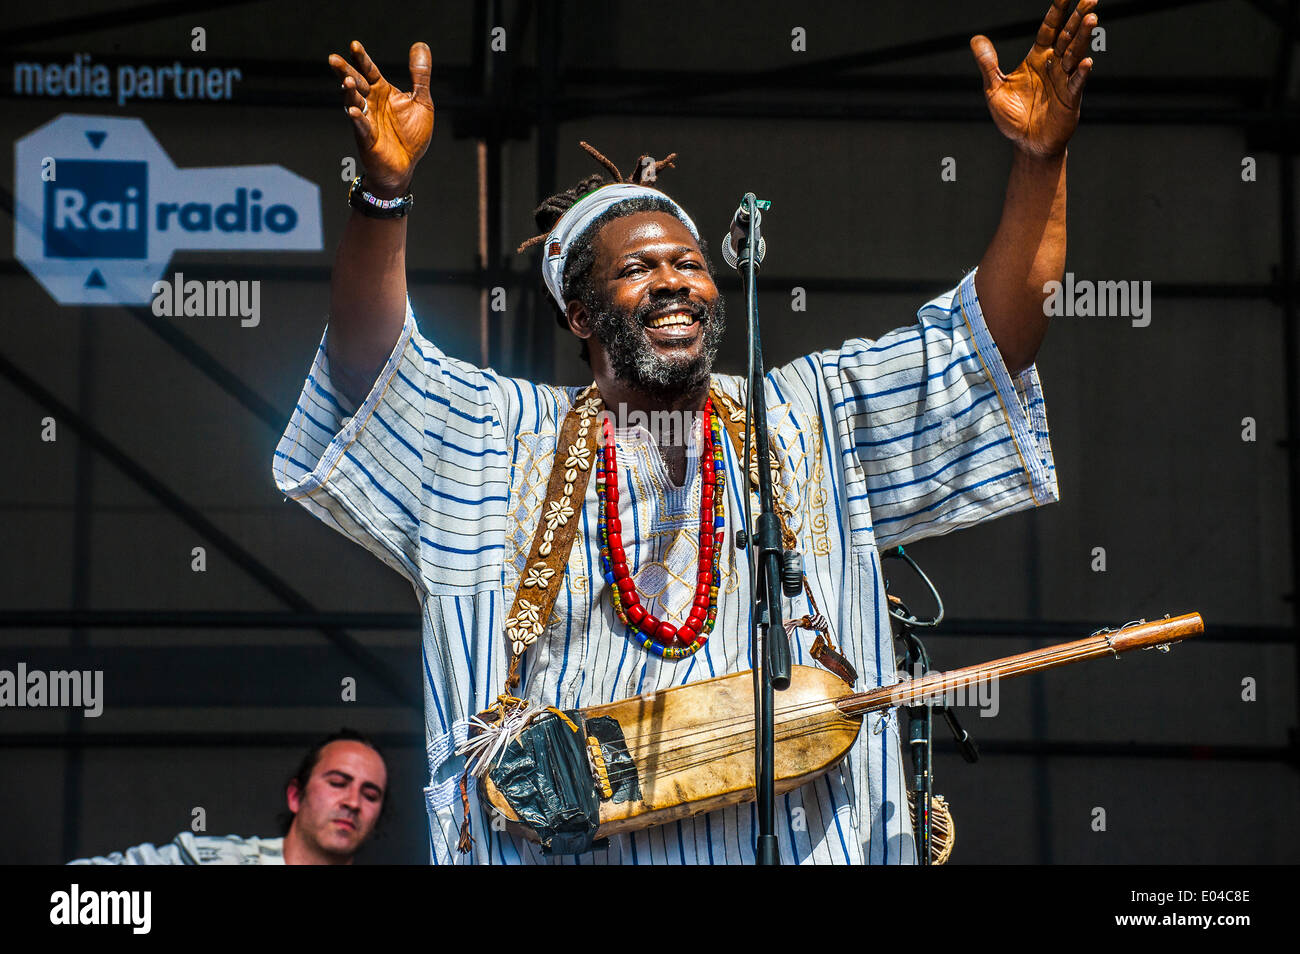 Turin, Italie. 01 mai, 2014. La Piazza Castello ' Torino Jazz Festival ' - Taranta nera - Salento a rencontré l'Afrique - Baba Sissoko Crédit : Realy Easy Star/Alamy Live News Banque D'Images